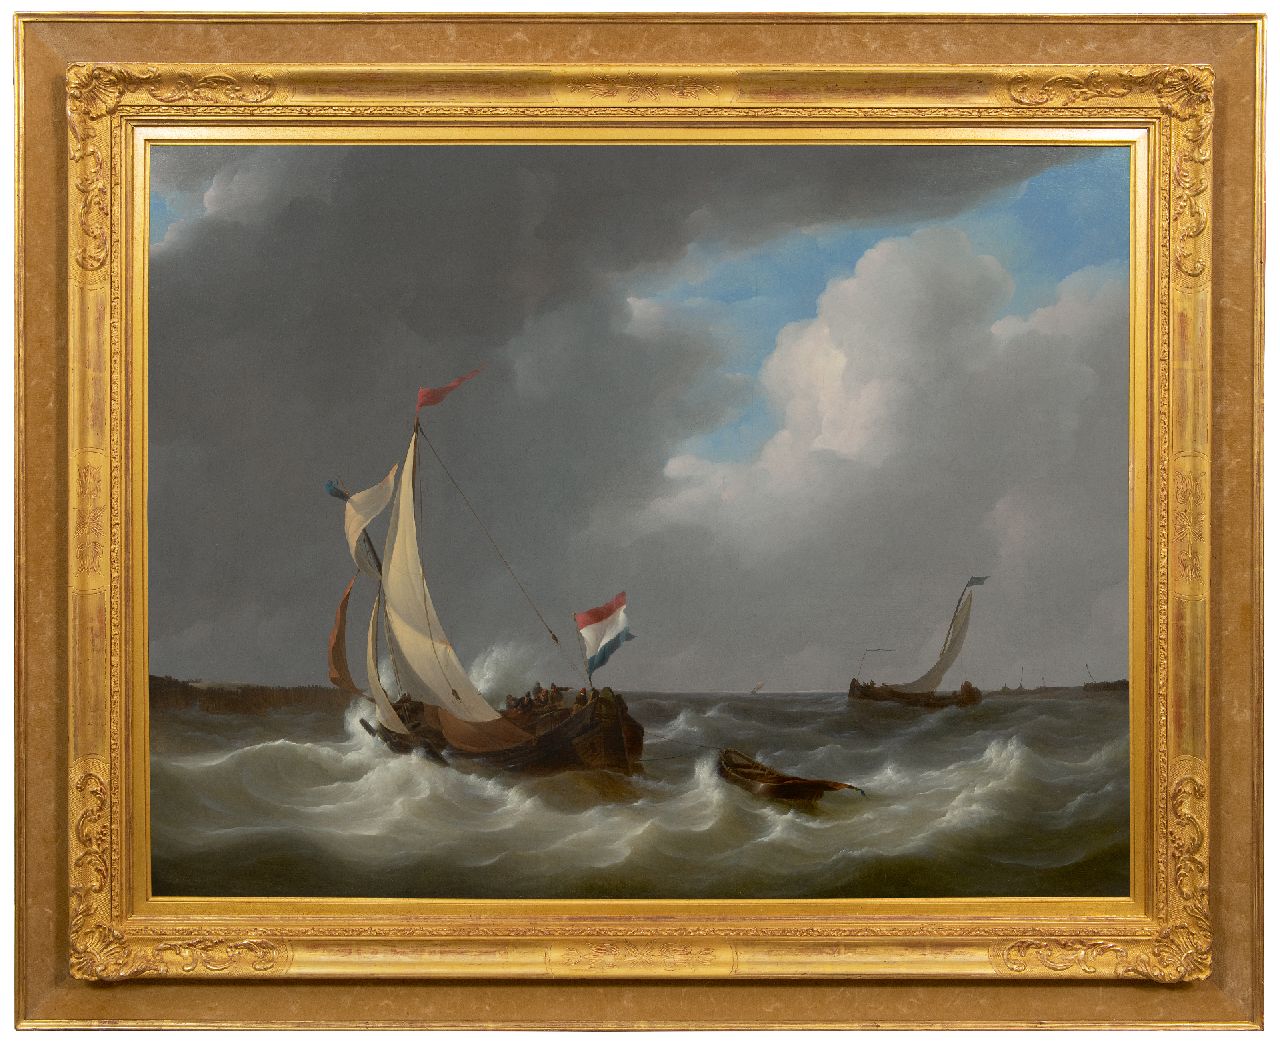 Schotel J.C.  | Johannes Christianus Schotel, Dutch boat on a choppy sea, oil on canvas 71.4 x 93.3 cm, signed l.l. and dated 1829